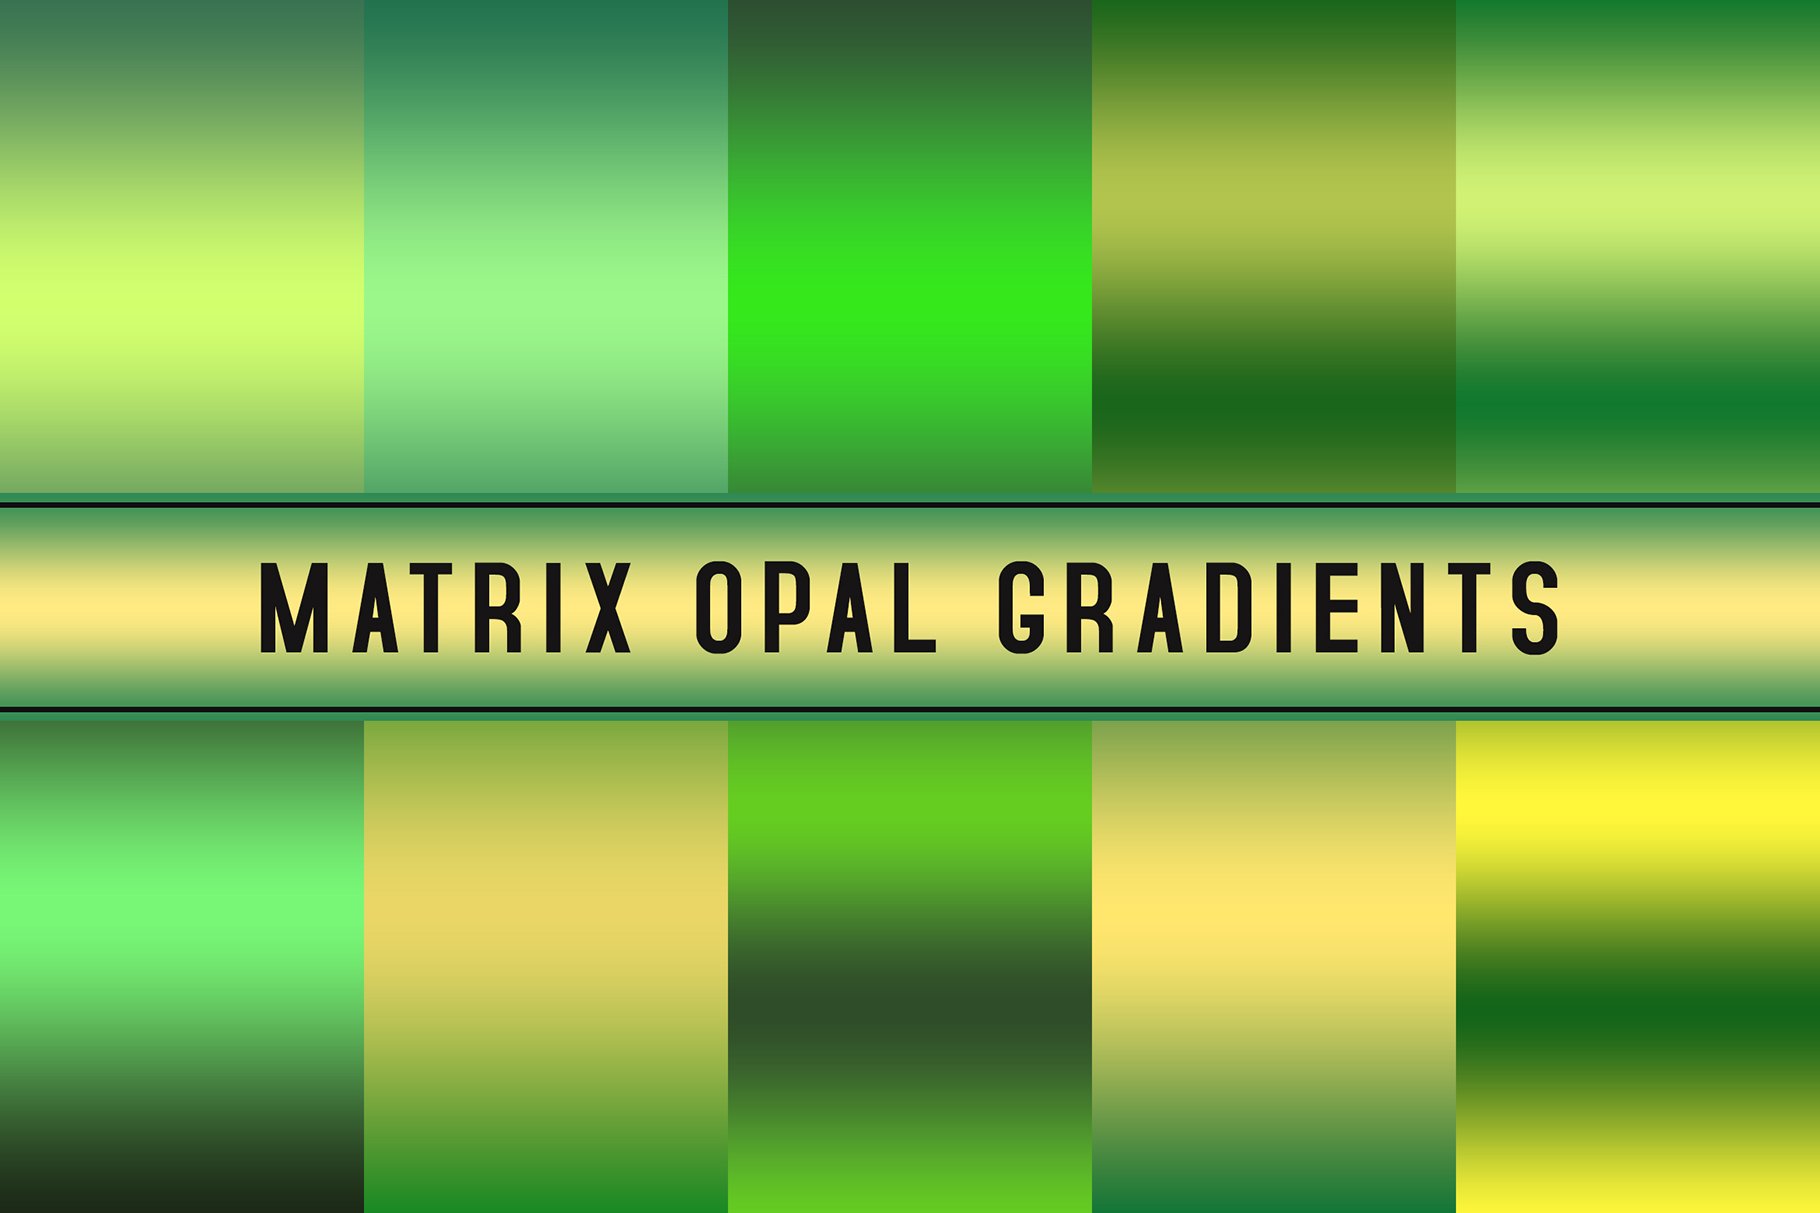 Matrix Opal Gradientscover image.